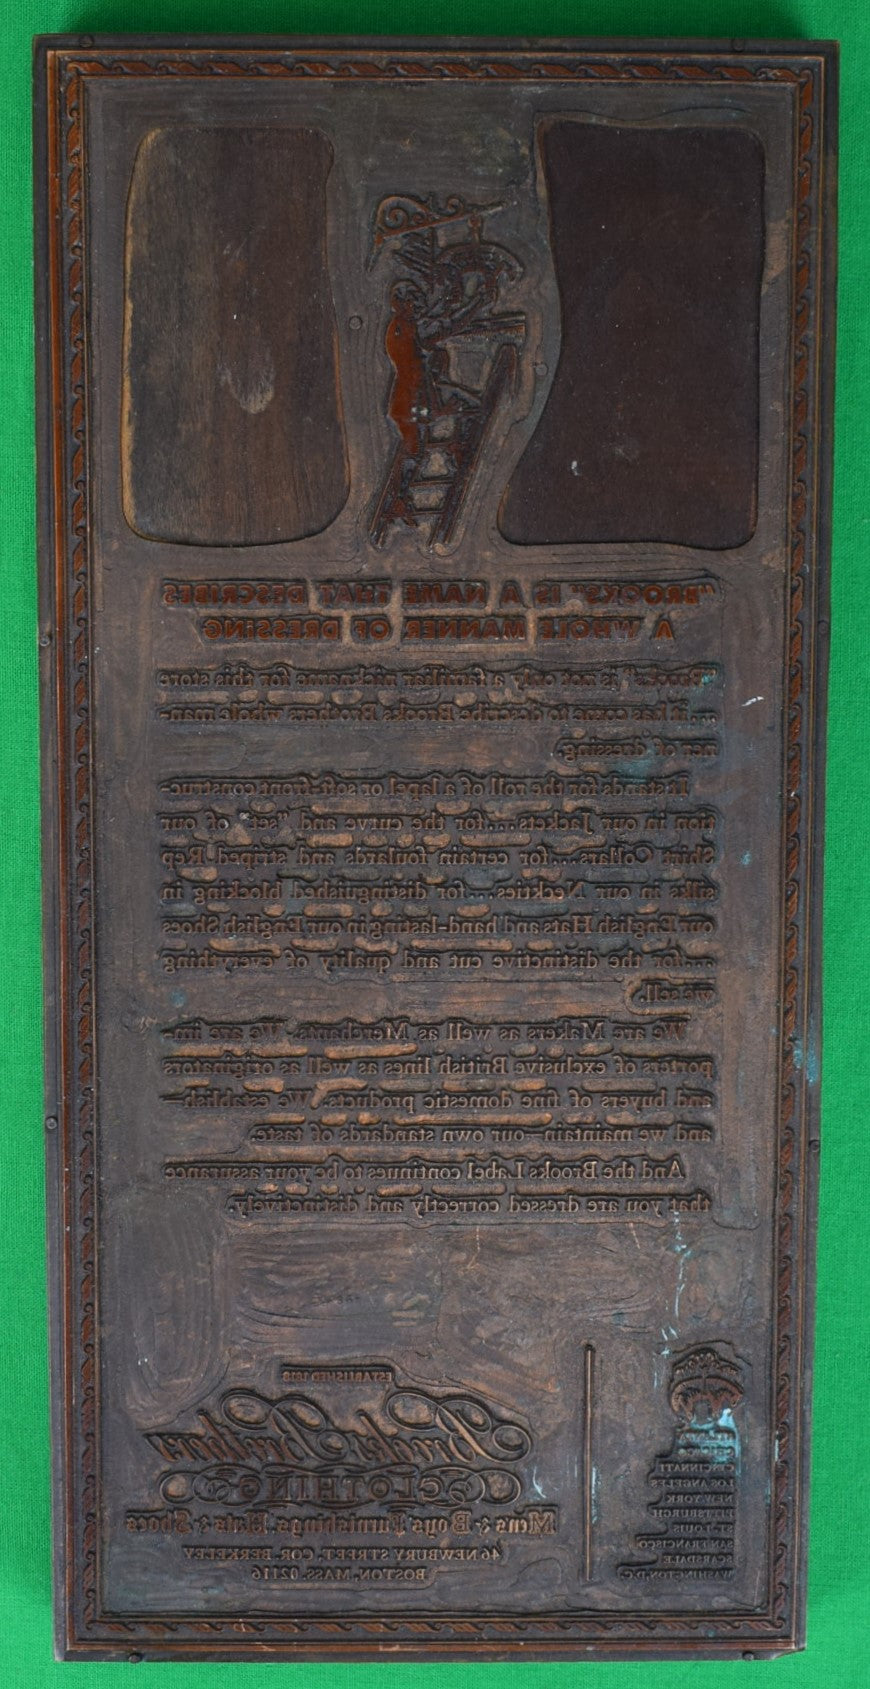 "Brooks Brothers Letterpress Wood Print Block Copper Advert Plate"